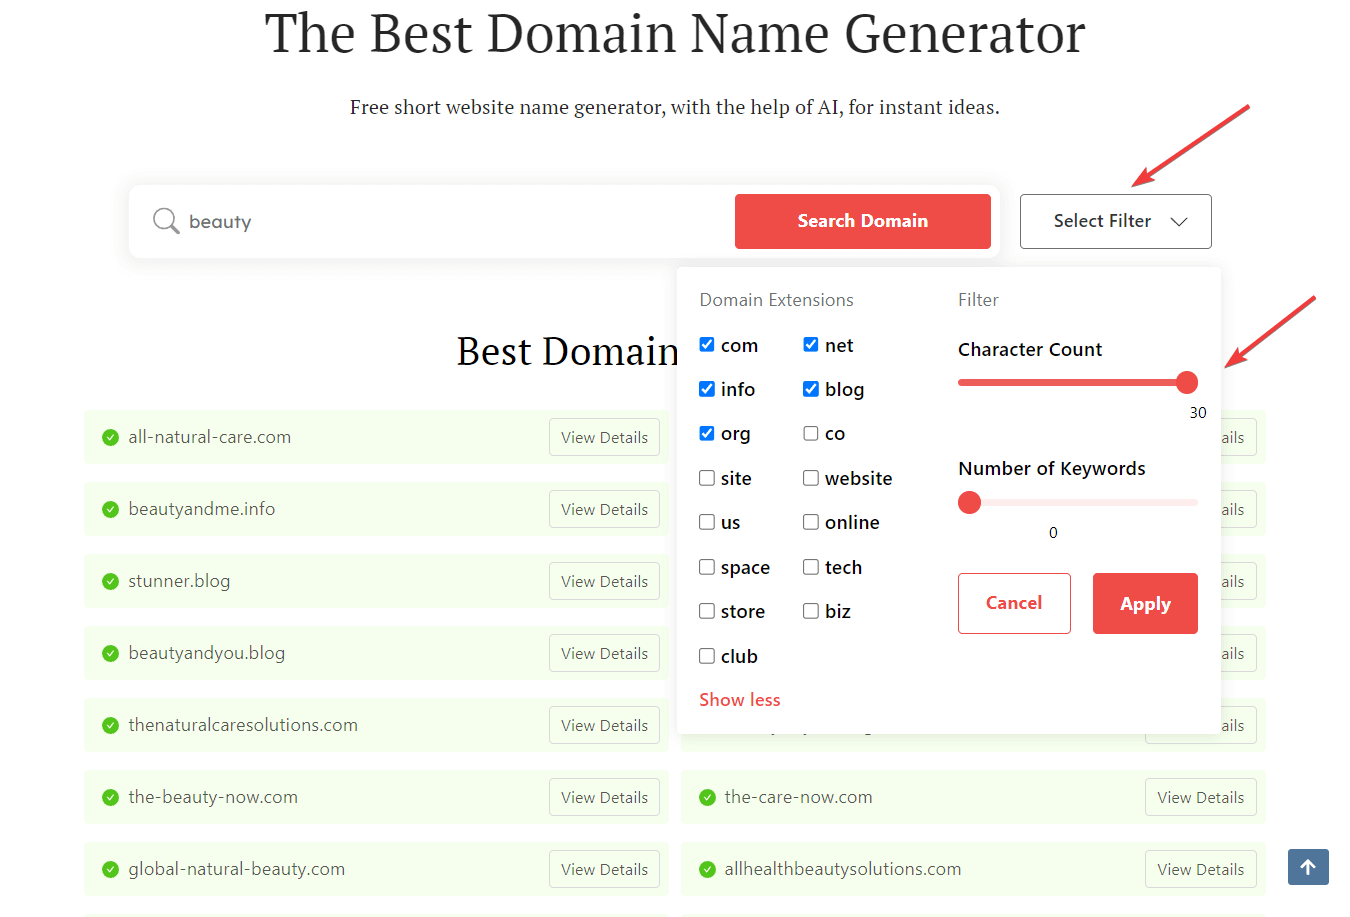 DomainWheel Select Filter option